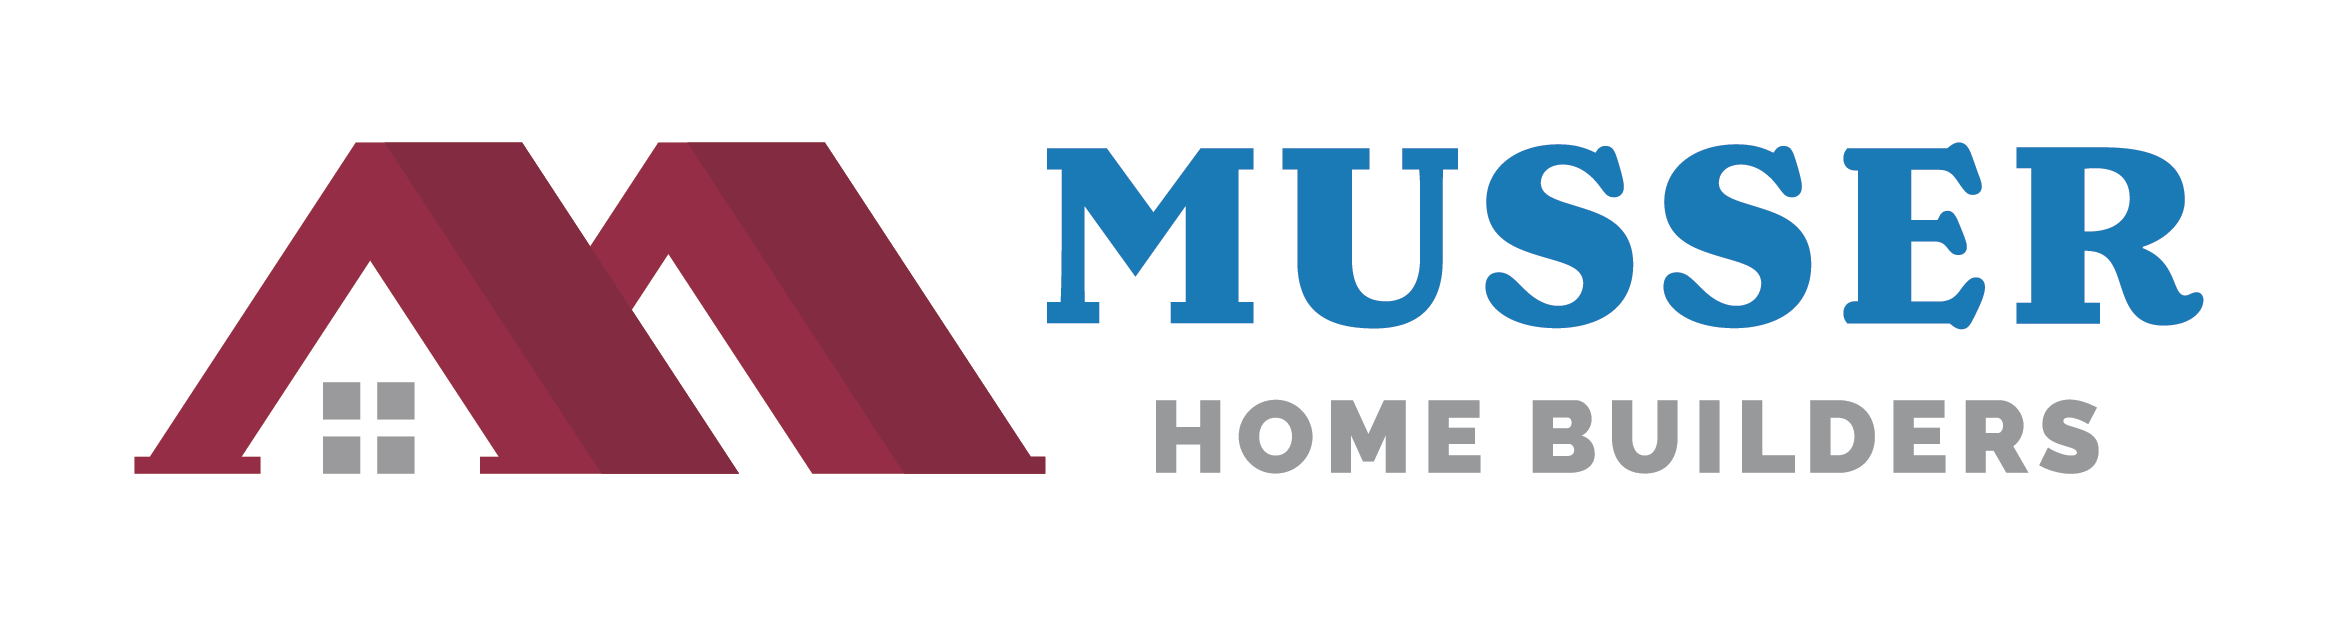 Musser Home Builders company logo